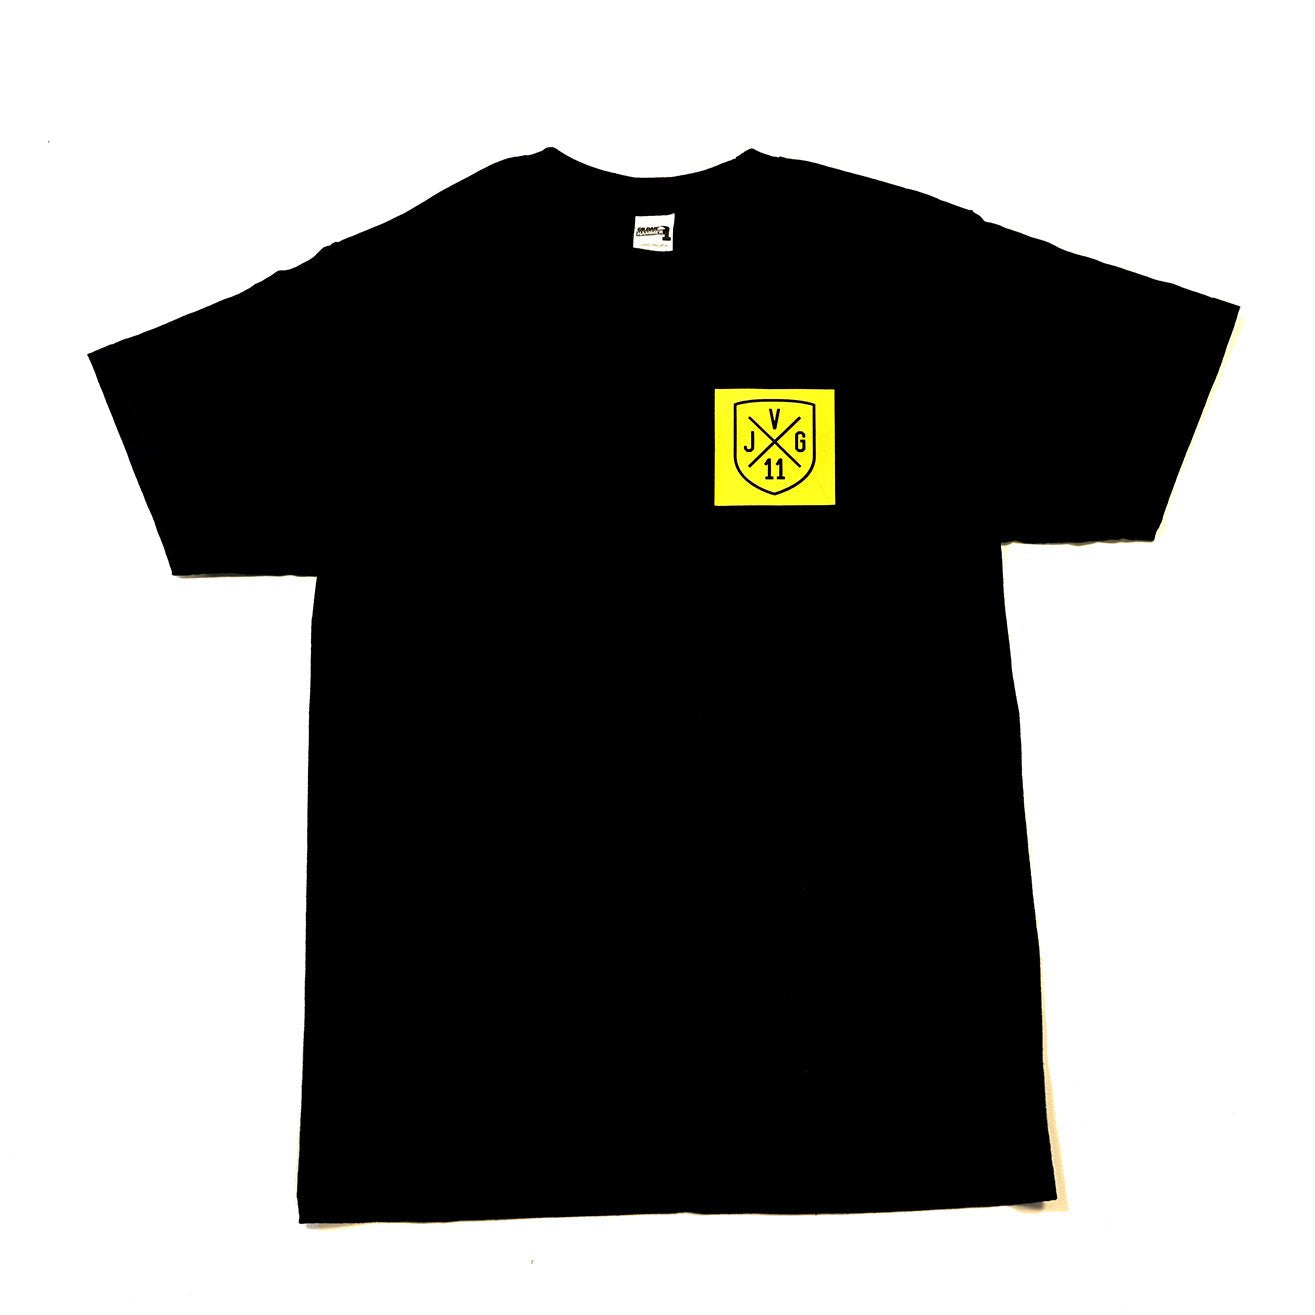 JVG Kids Yellow Block T-shirt